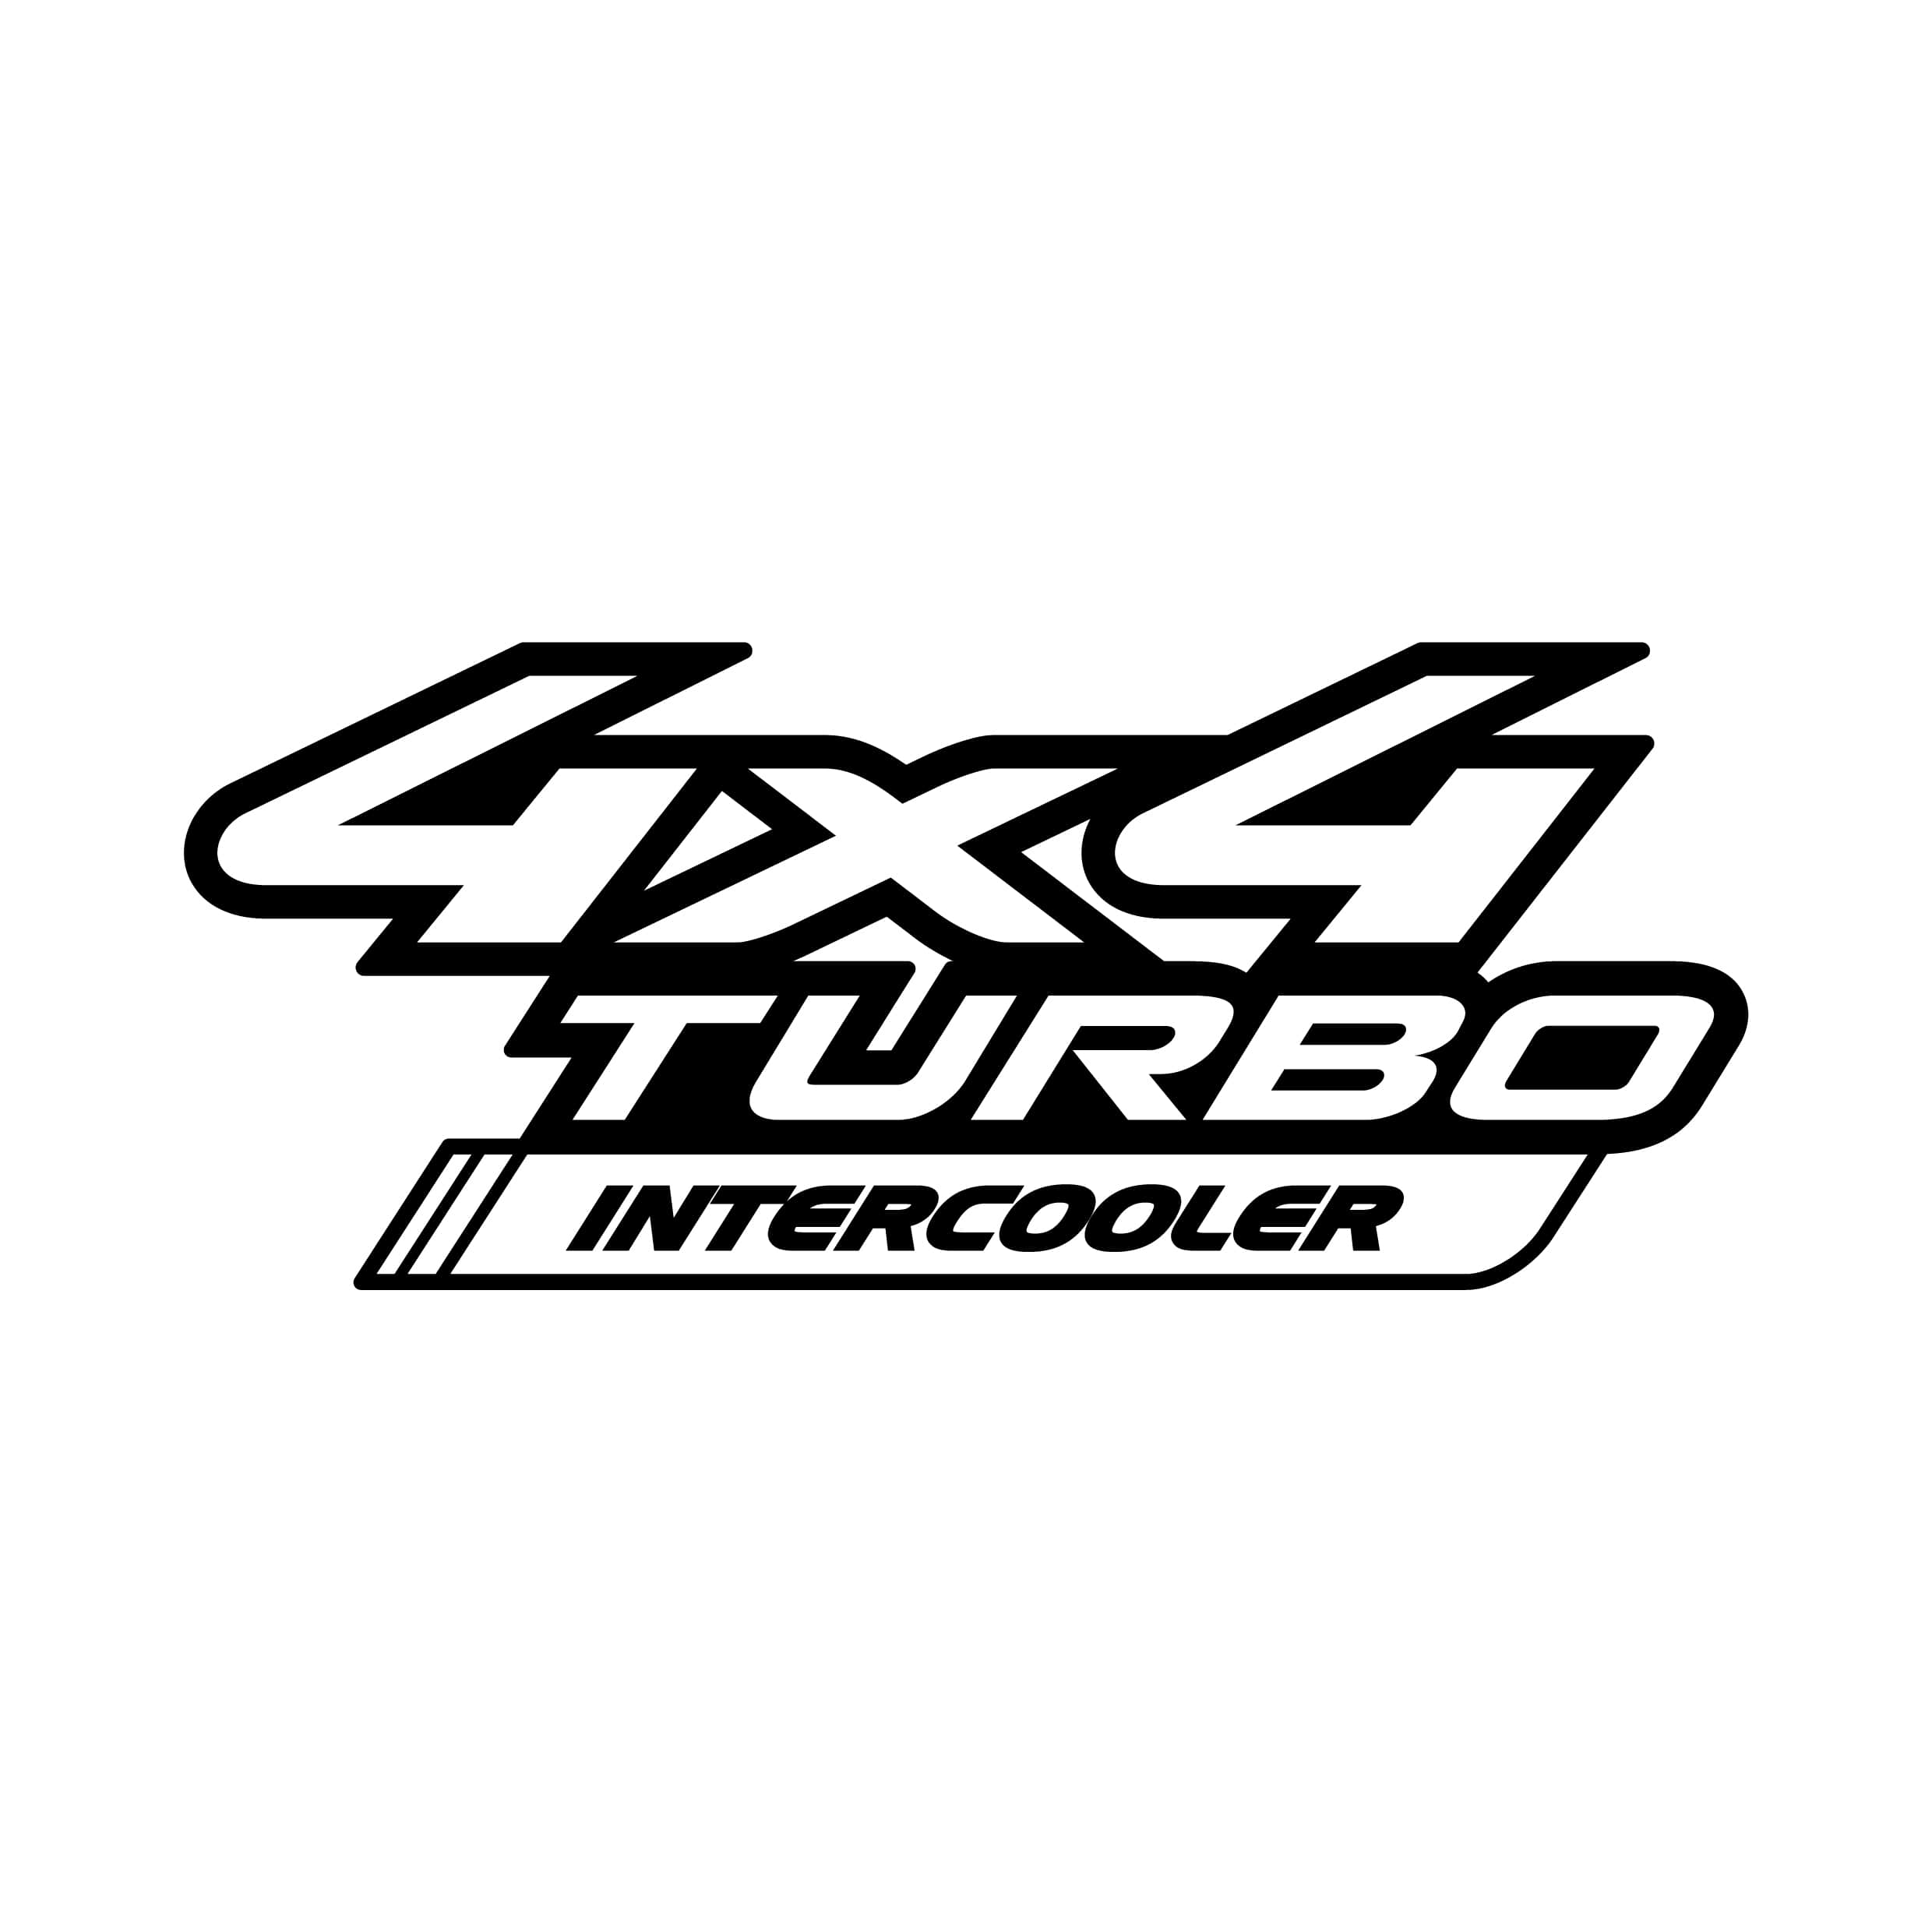 stickers-toyota-4x4-turbo-intercooler-ref14-autocollant-sticker-suv-off-road-autocollants-decals-sponsors-tuning-rallye-voiture-logo-min